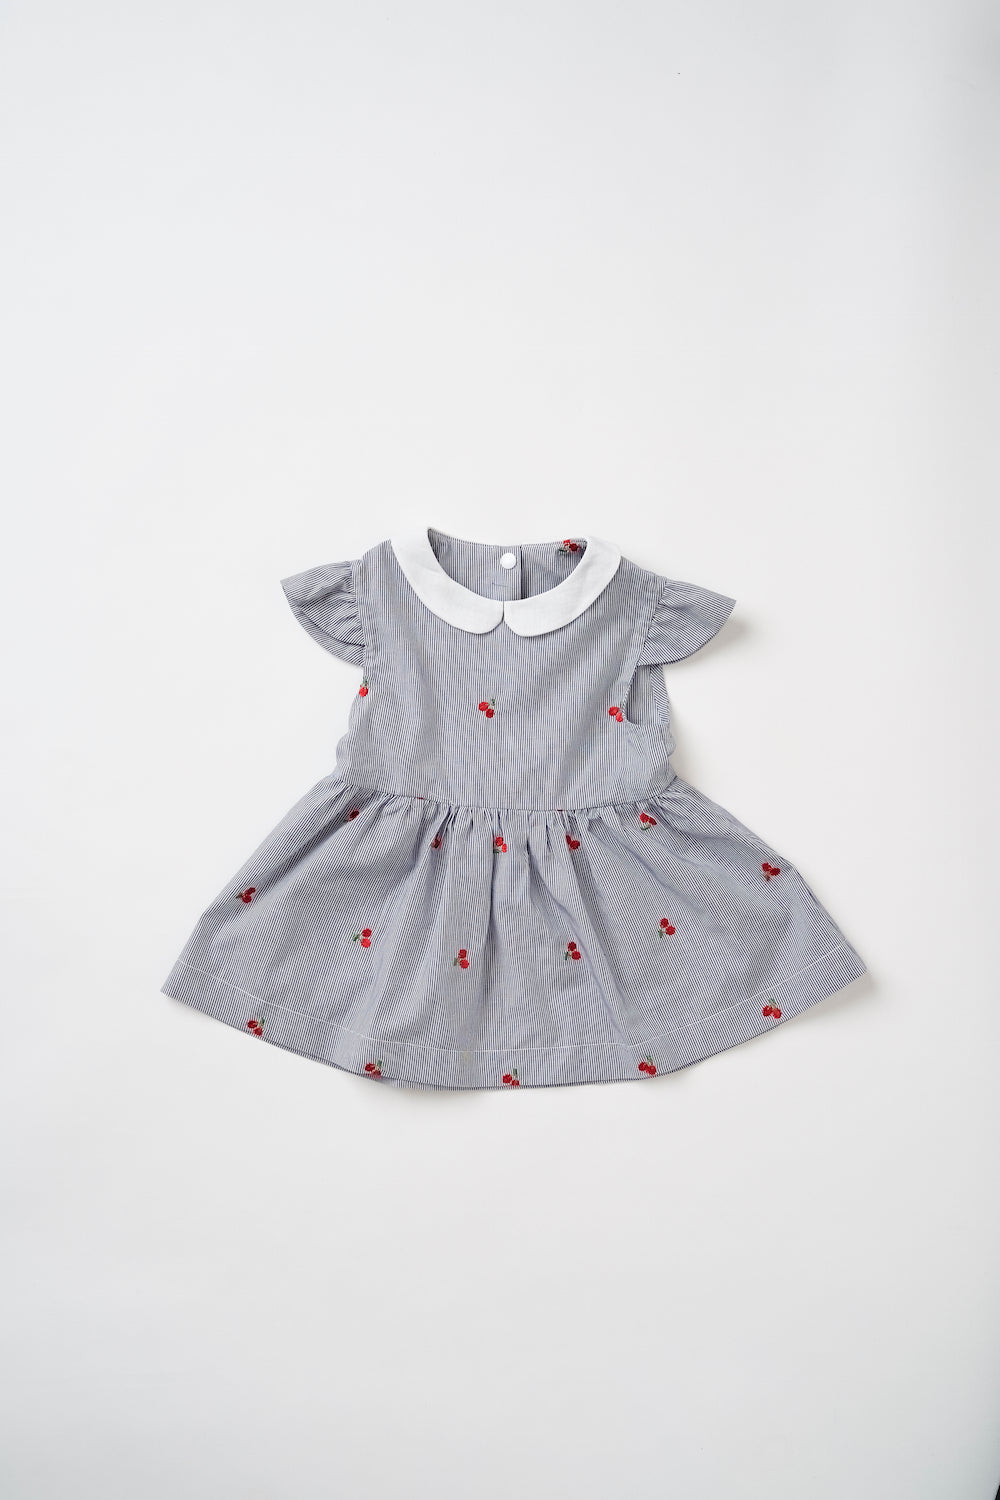 Daisy Dress Sewing Pattern | Poppy and Jazz